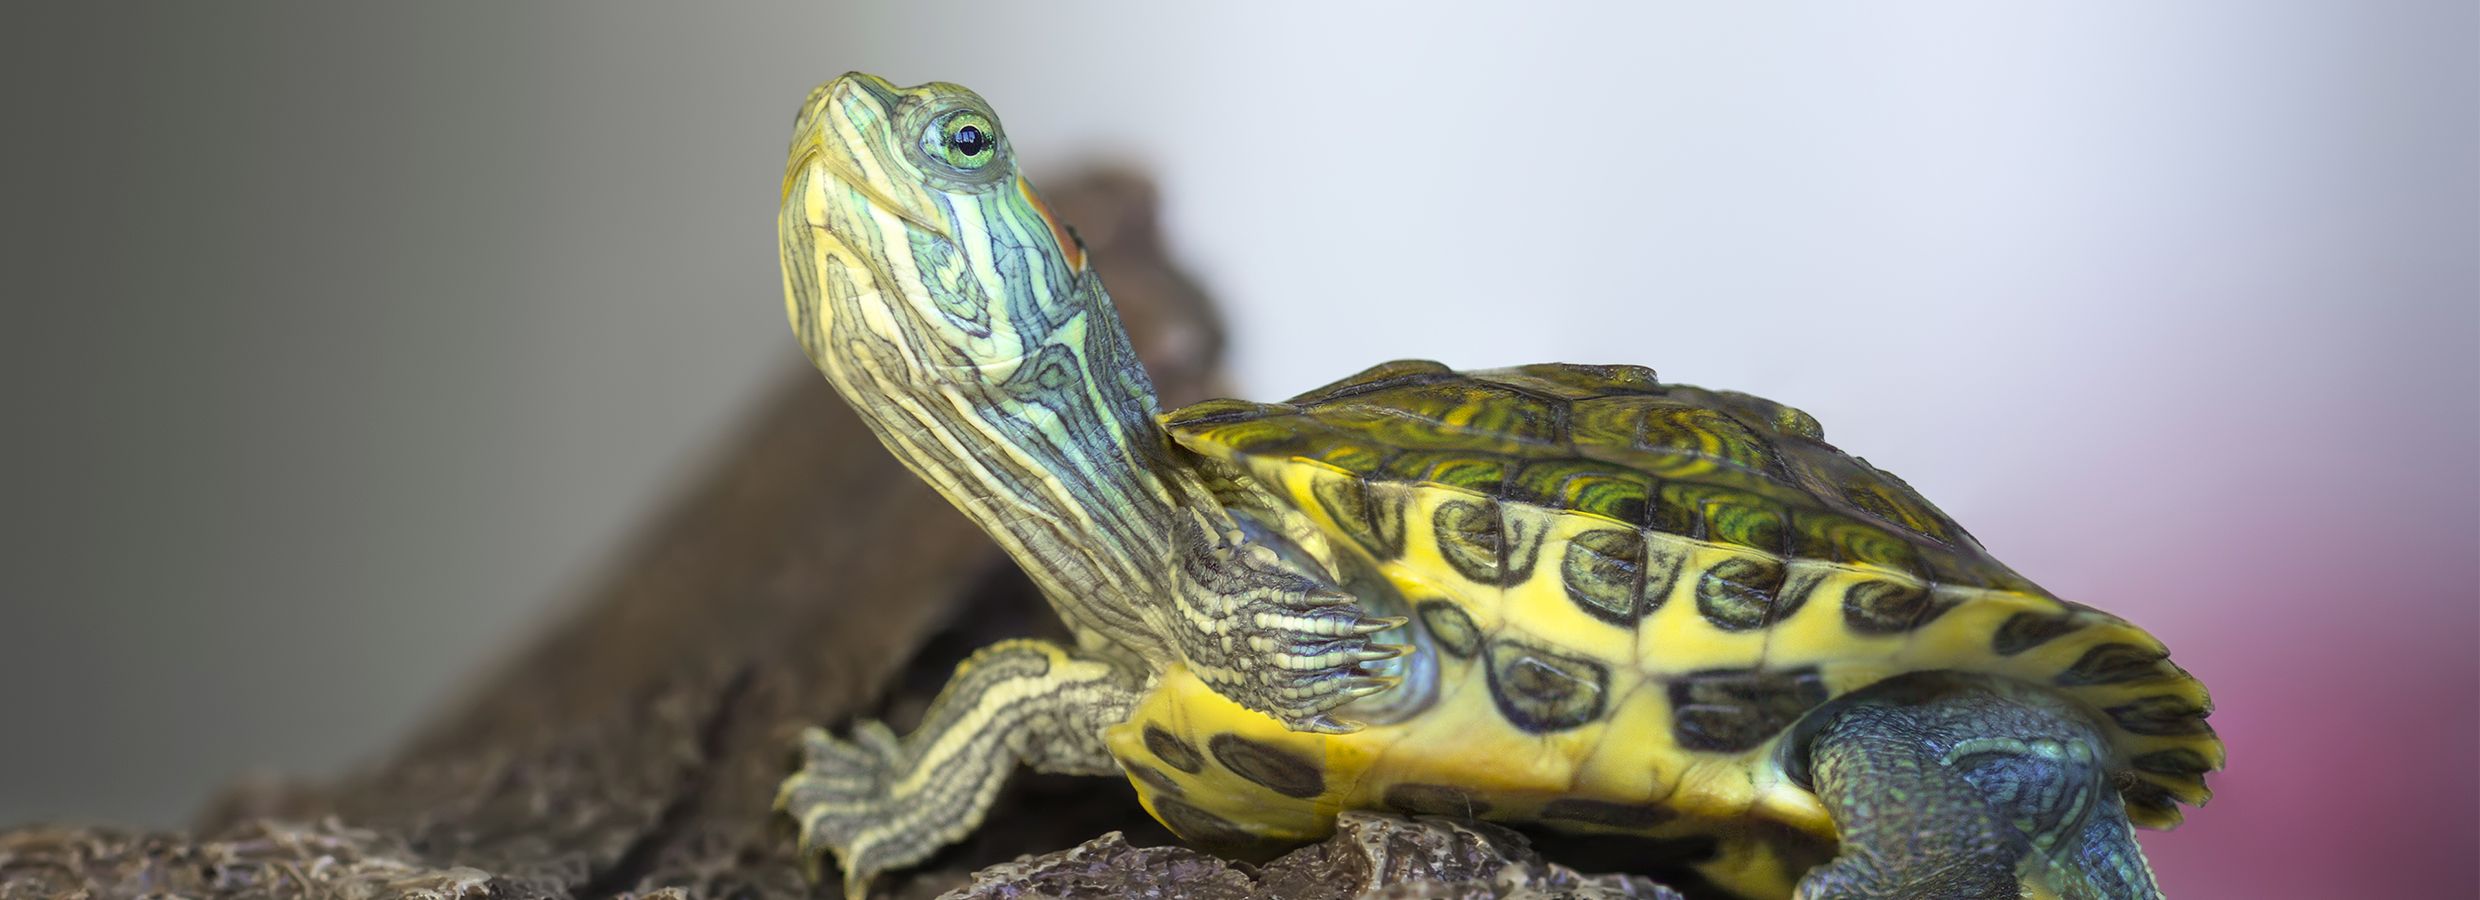 Turtles as Pets: Care & Information | PetSmart